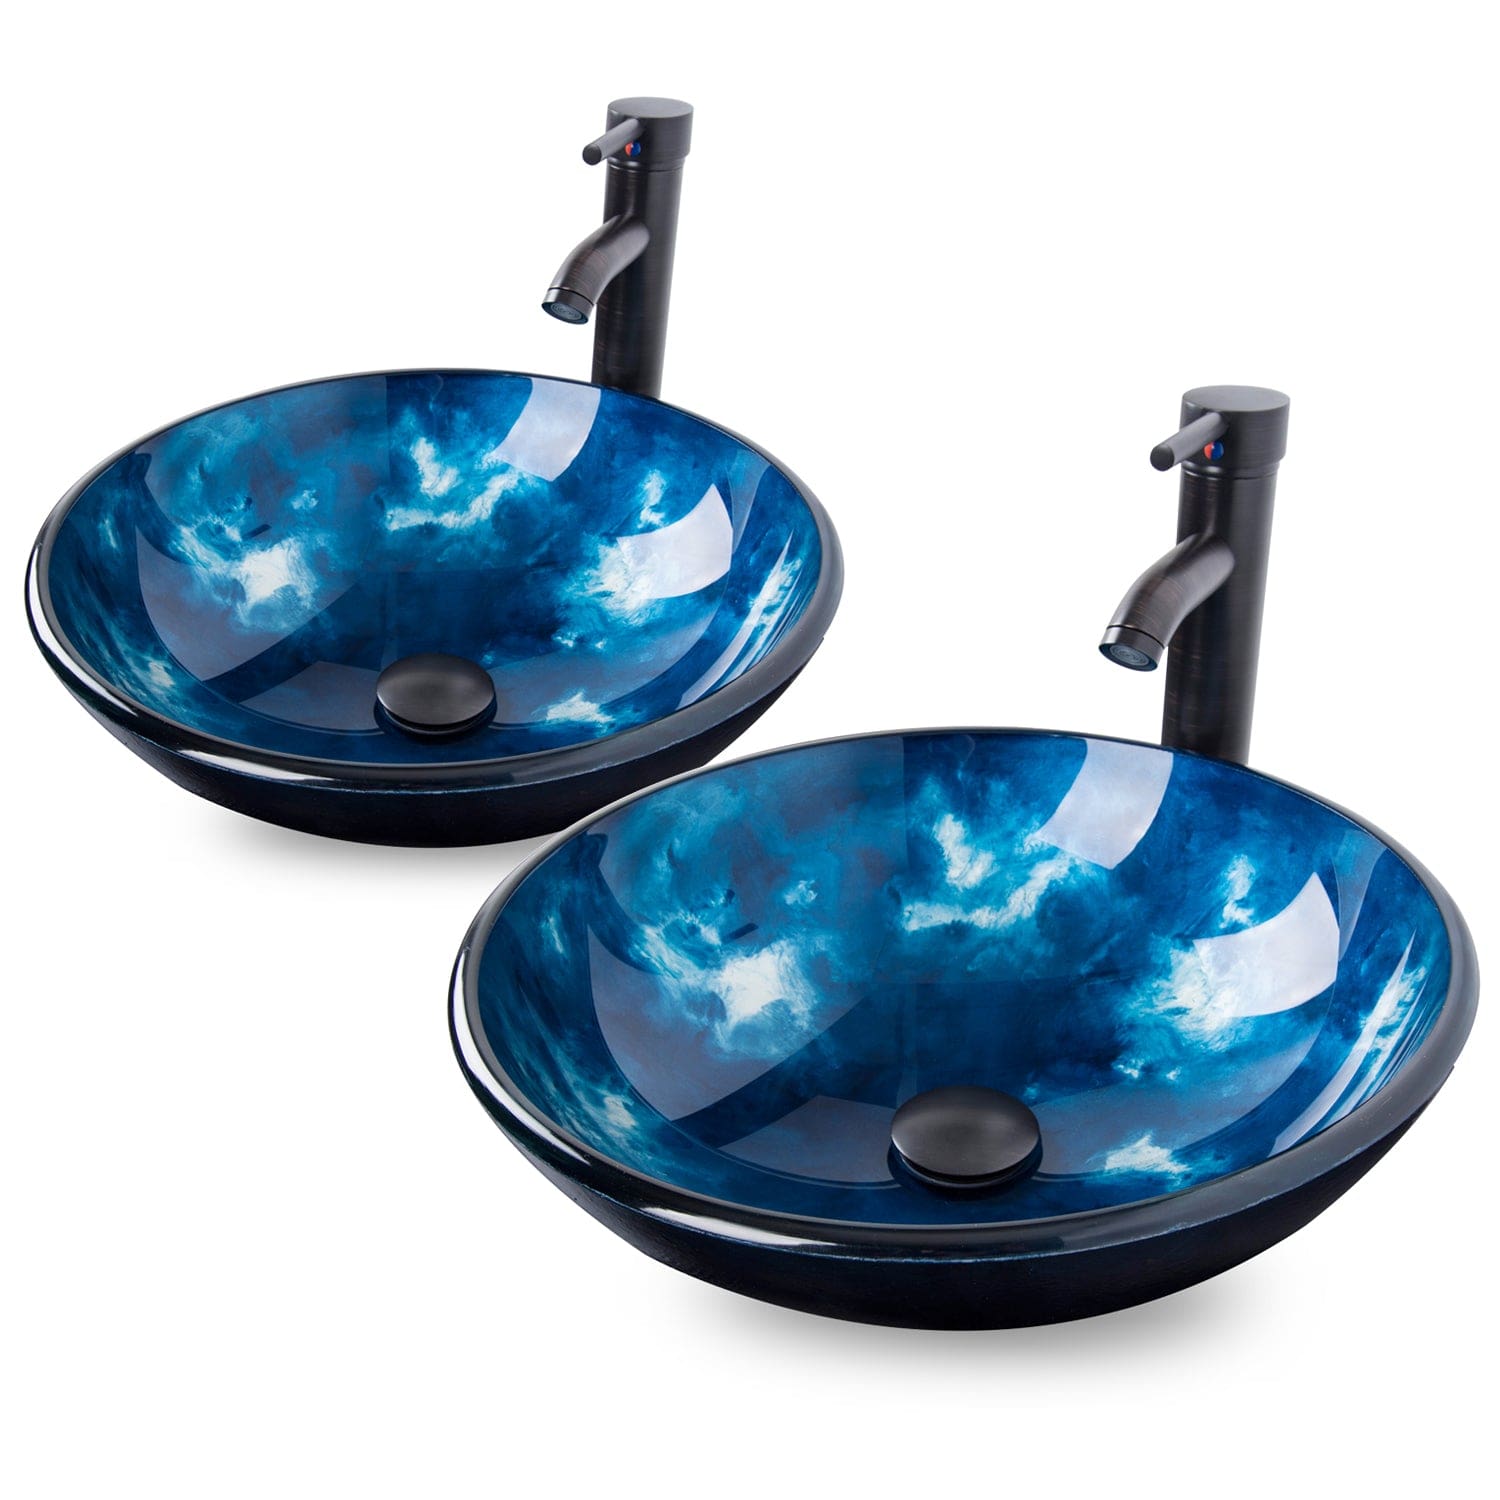 Two Elecwish Artistic Vessel Sink Bathroom Glass Bowl Faucet Drain Combo,Ocean Blue